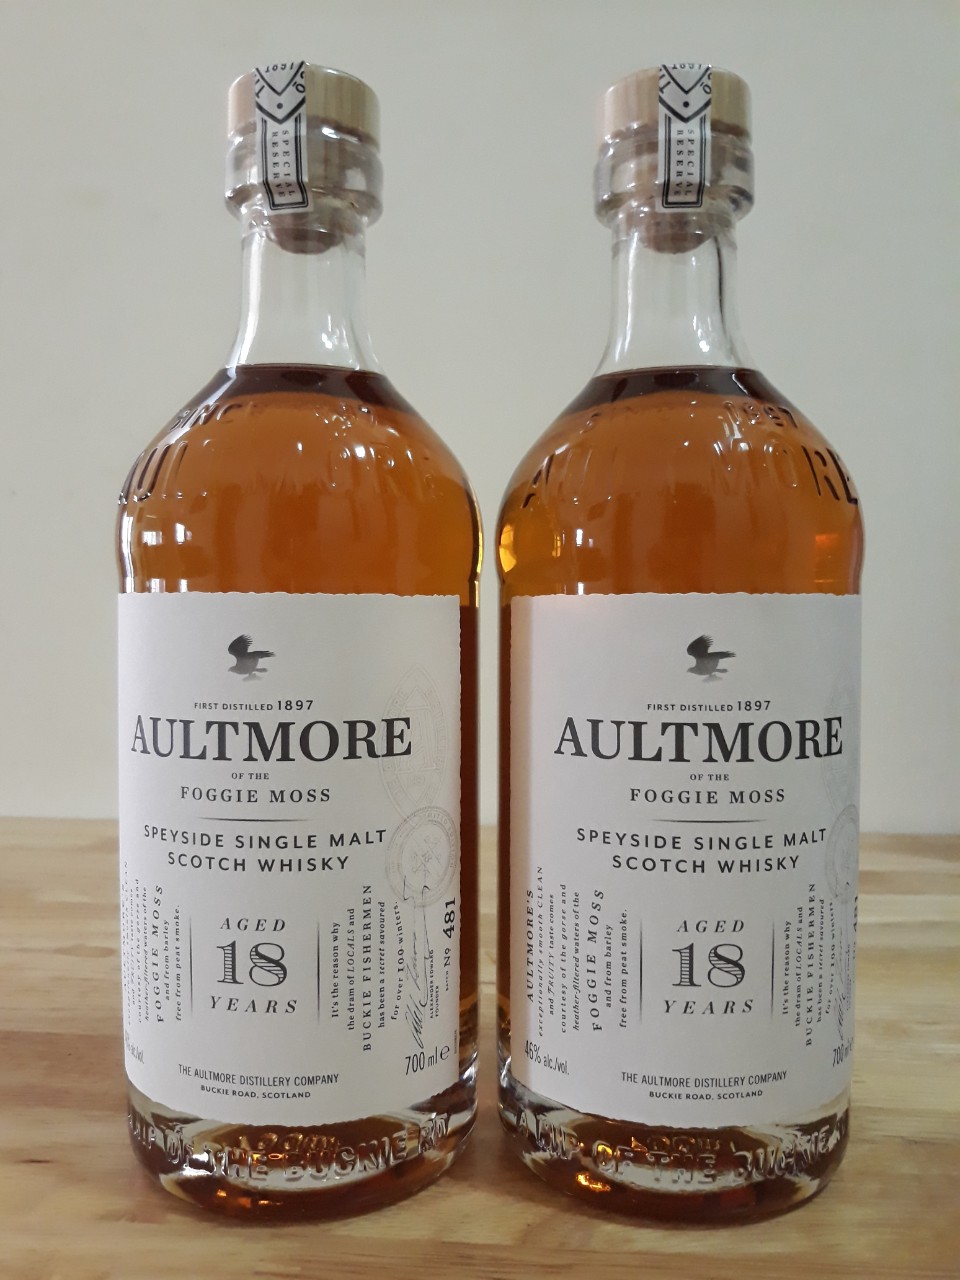 Rượu Aultmore 18